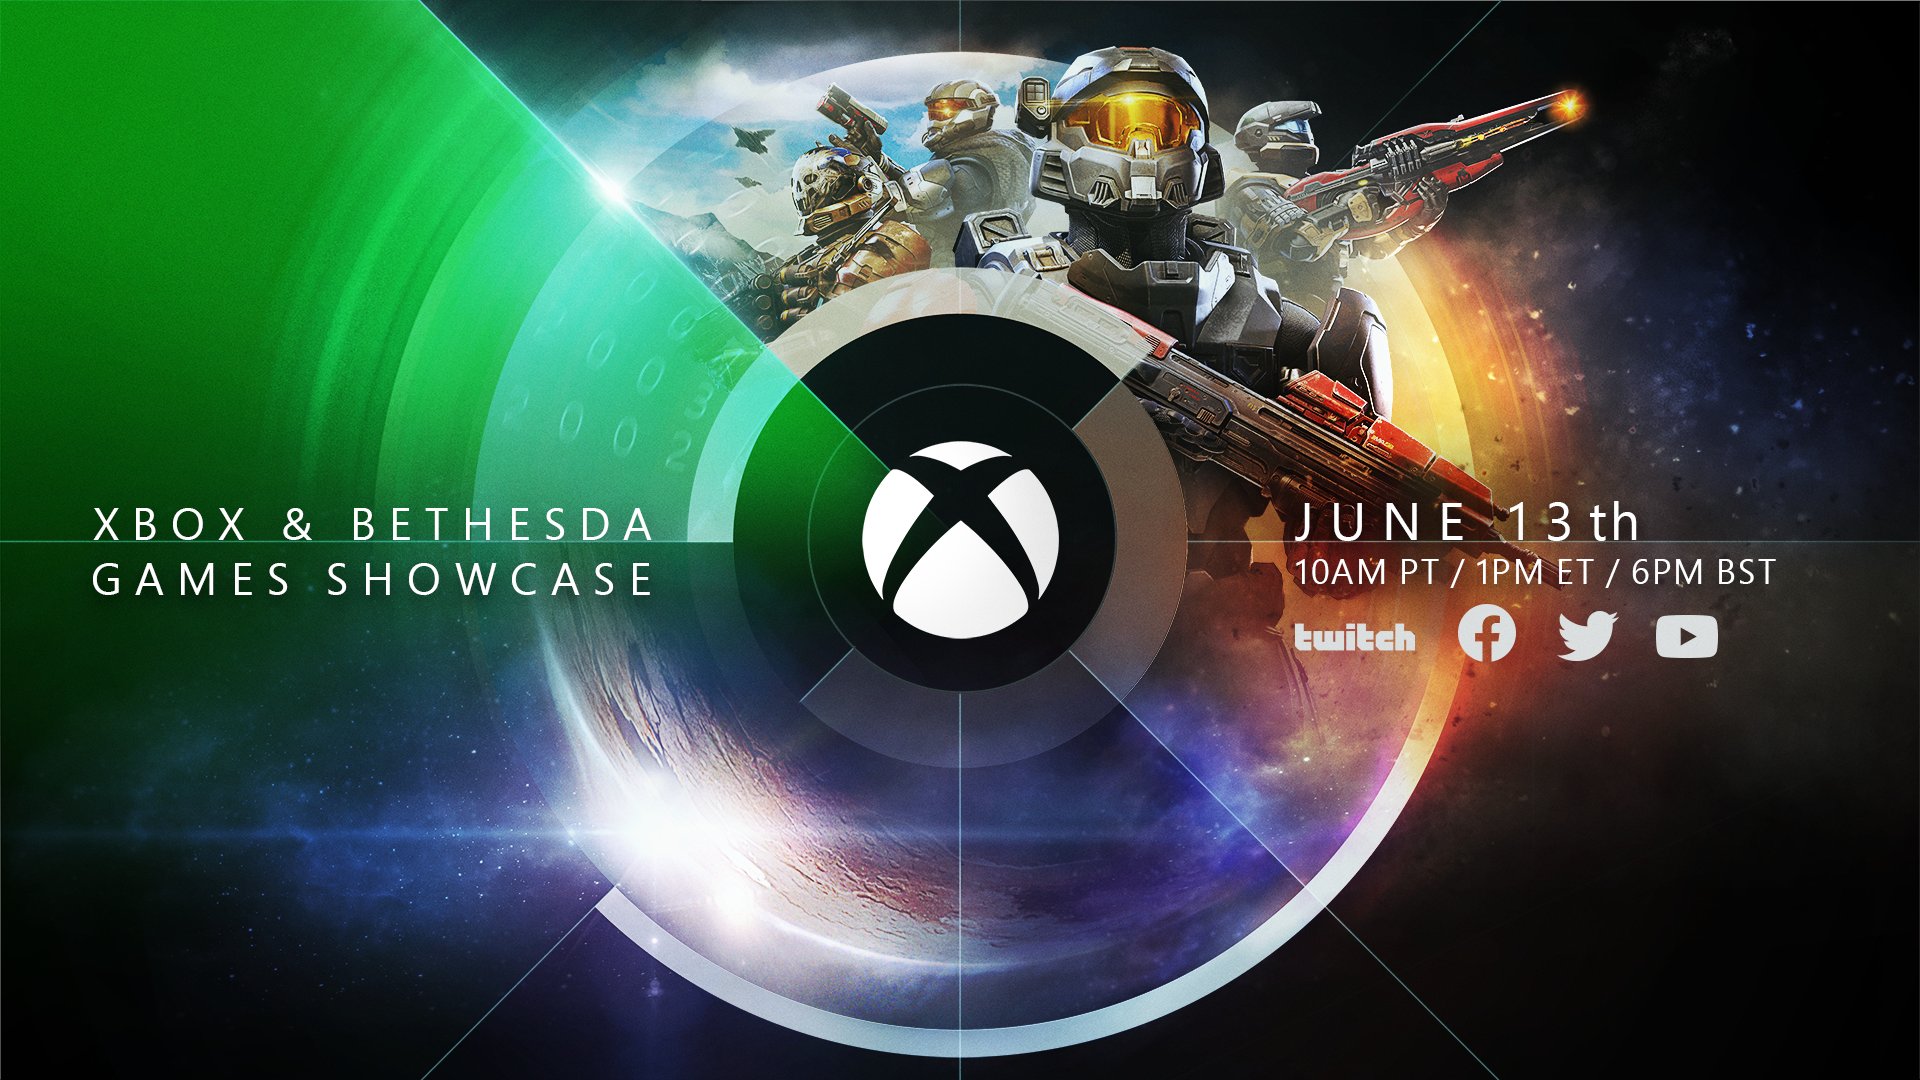 Xbox & Bethesda Games Showcase จะจัดขึ้นในวันที่ 14 มิ.ย. นี้